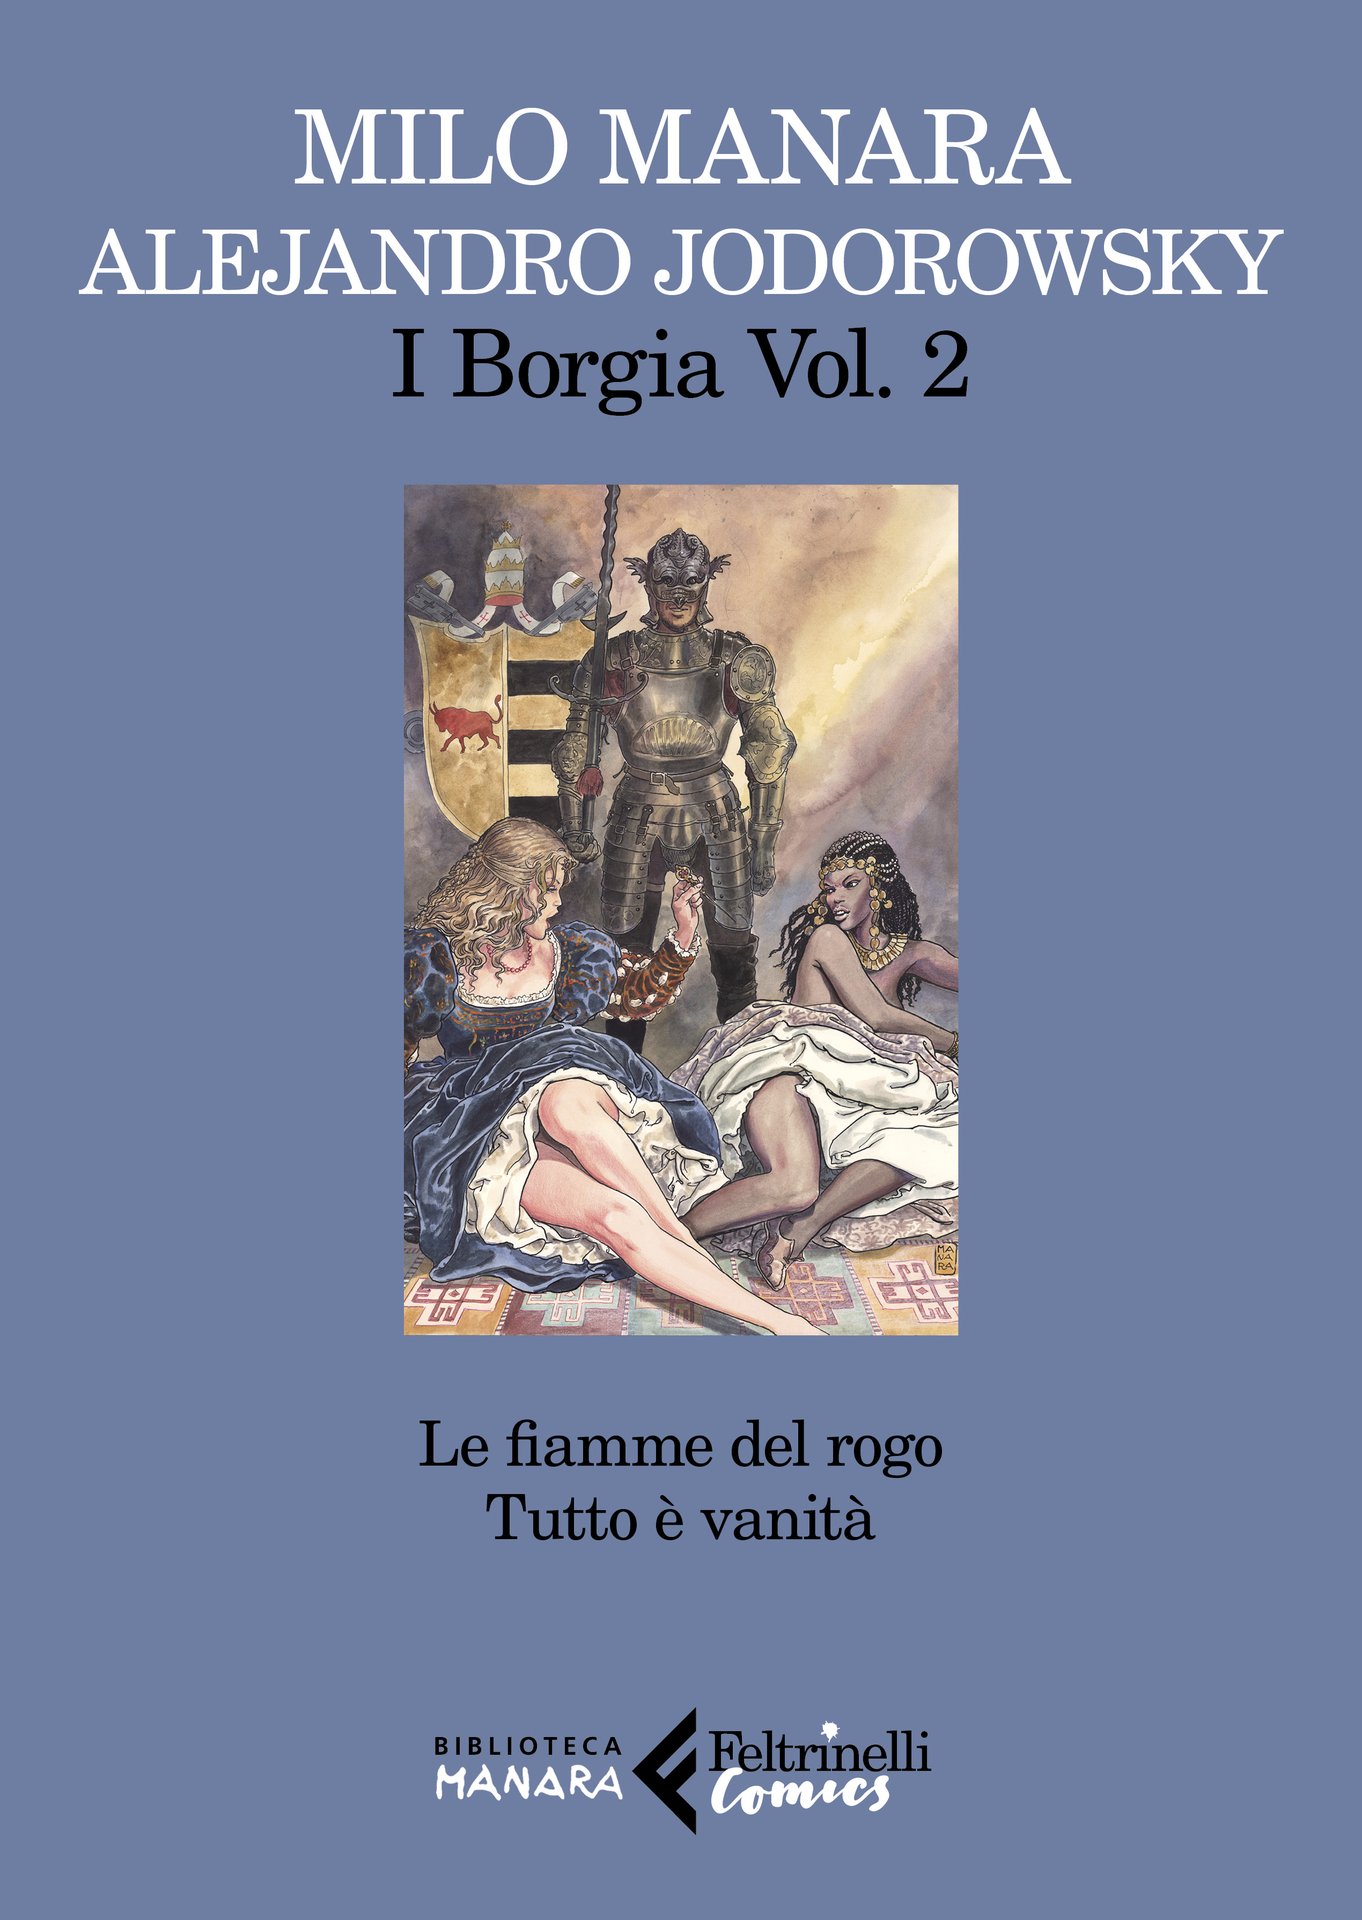 I Borgia, vol. 2